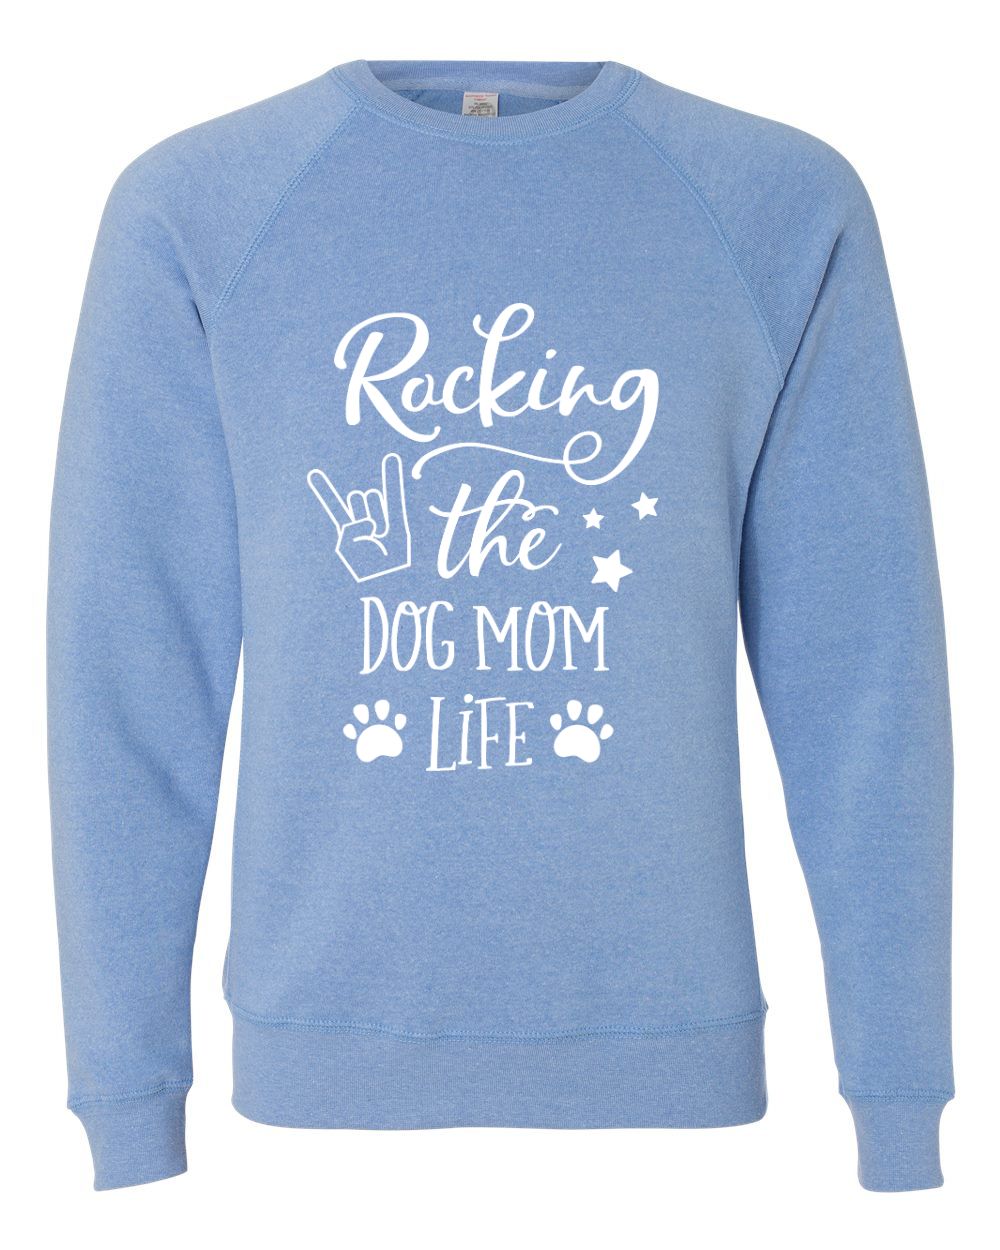 Rocking The Dog Mom Life Sweatshirt